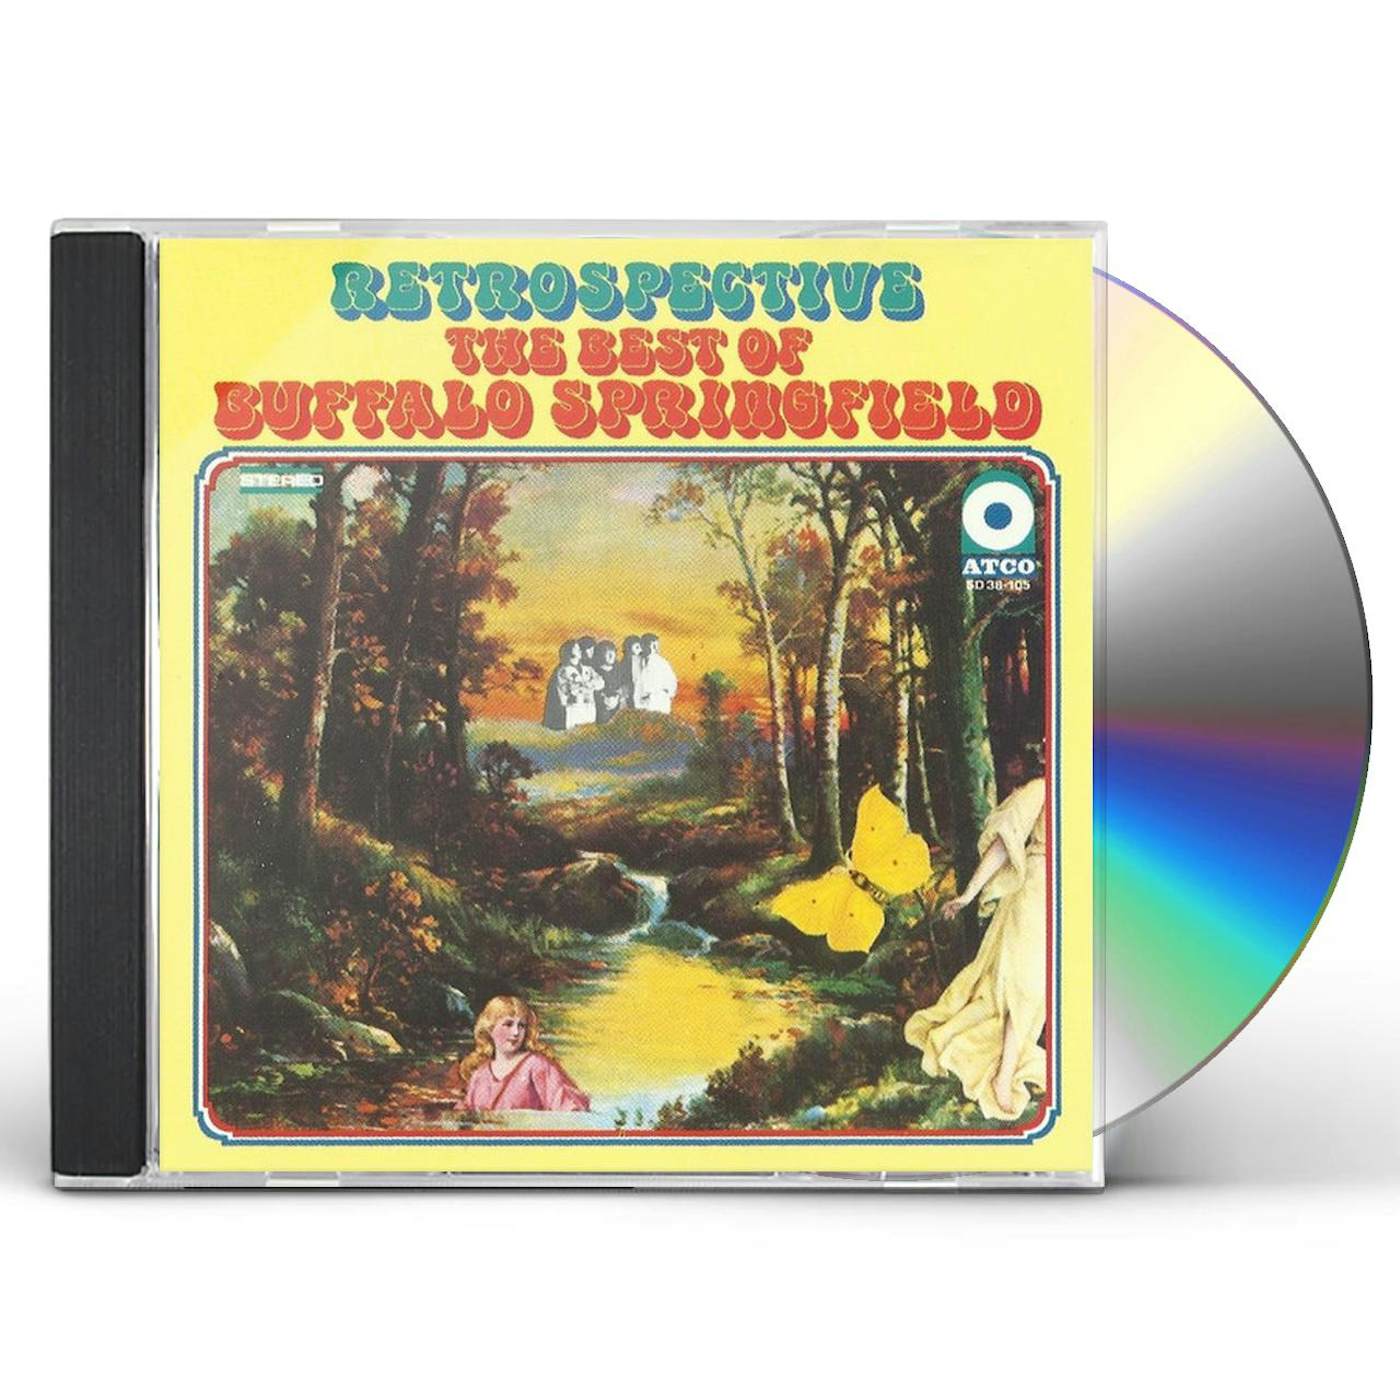 BEST OF BUFFALO SPRINGFIELD: THE RETROSPECTIVE CD